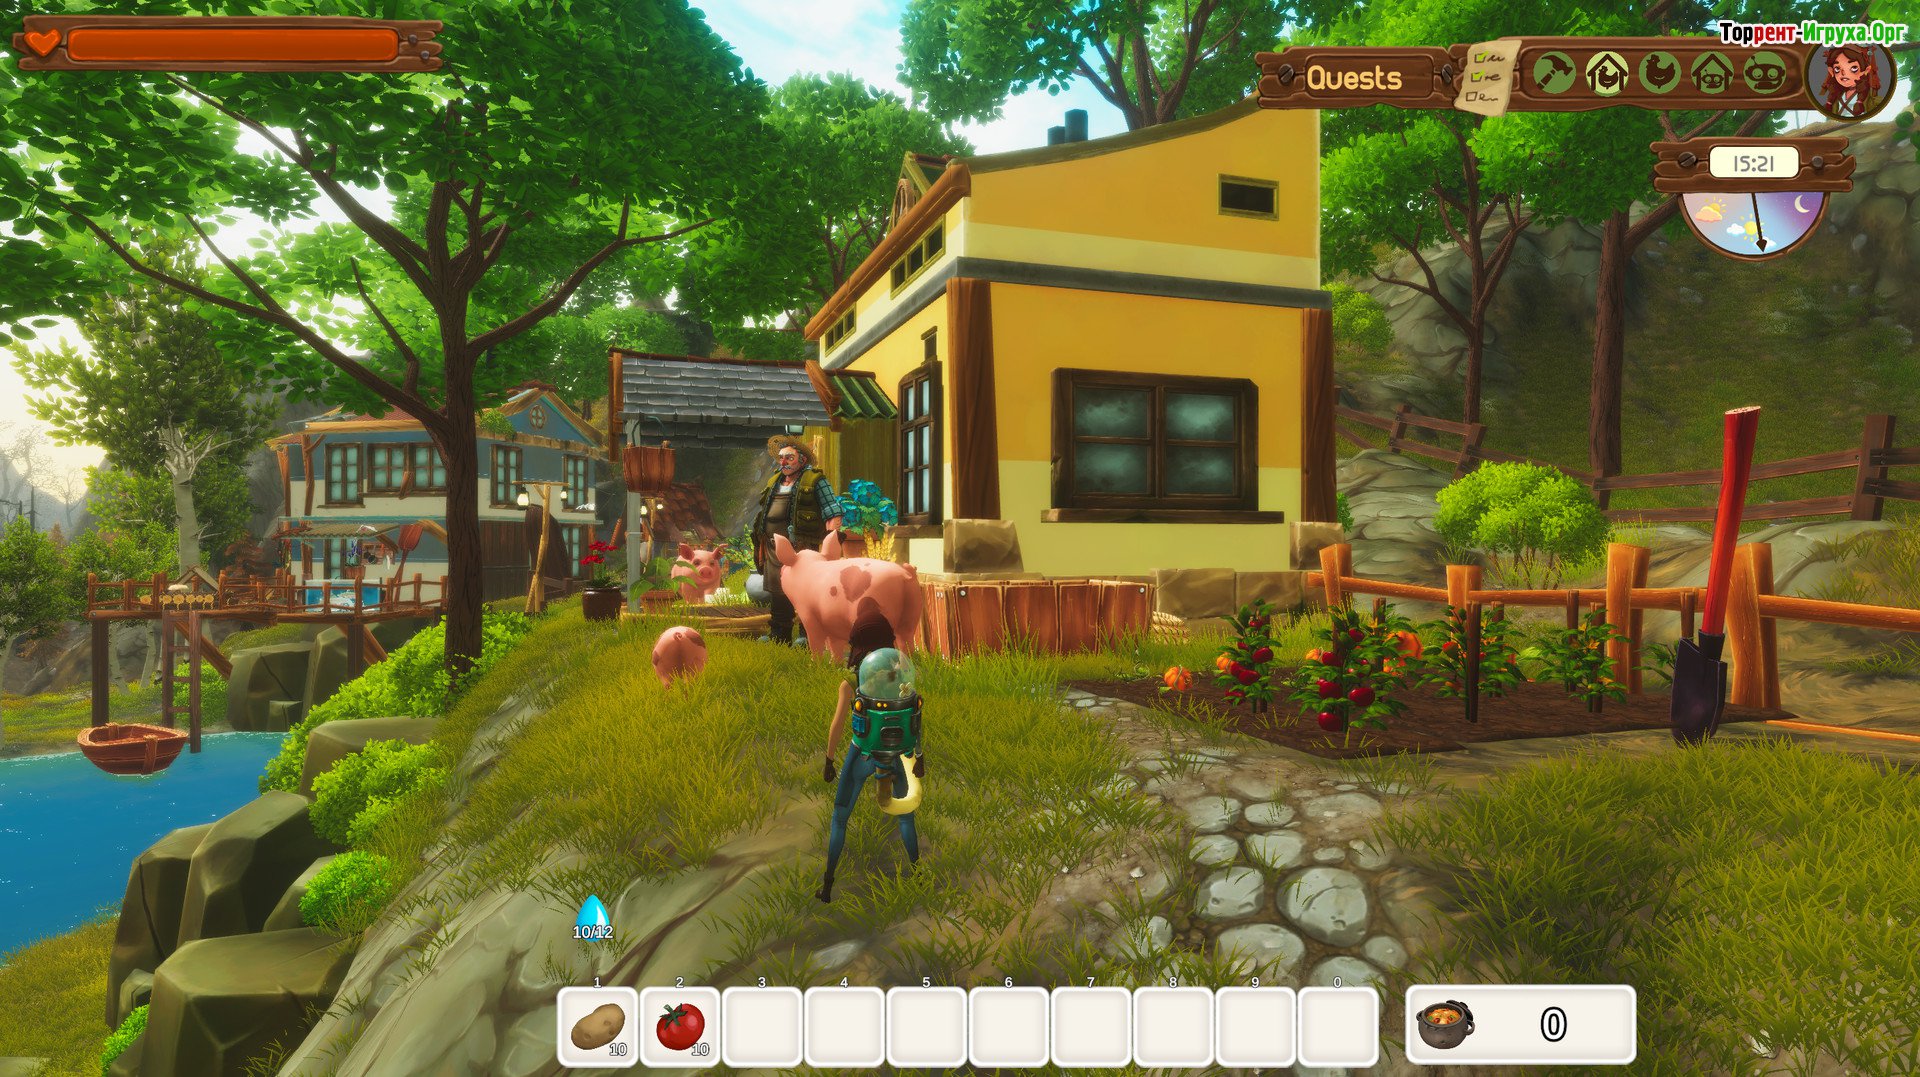 Away home gameplay image